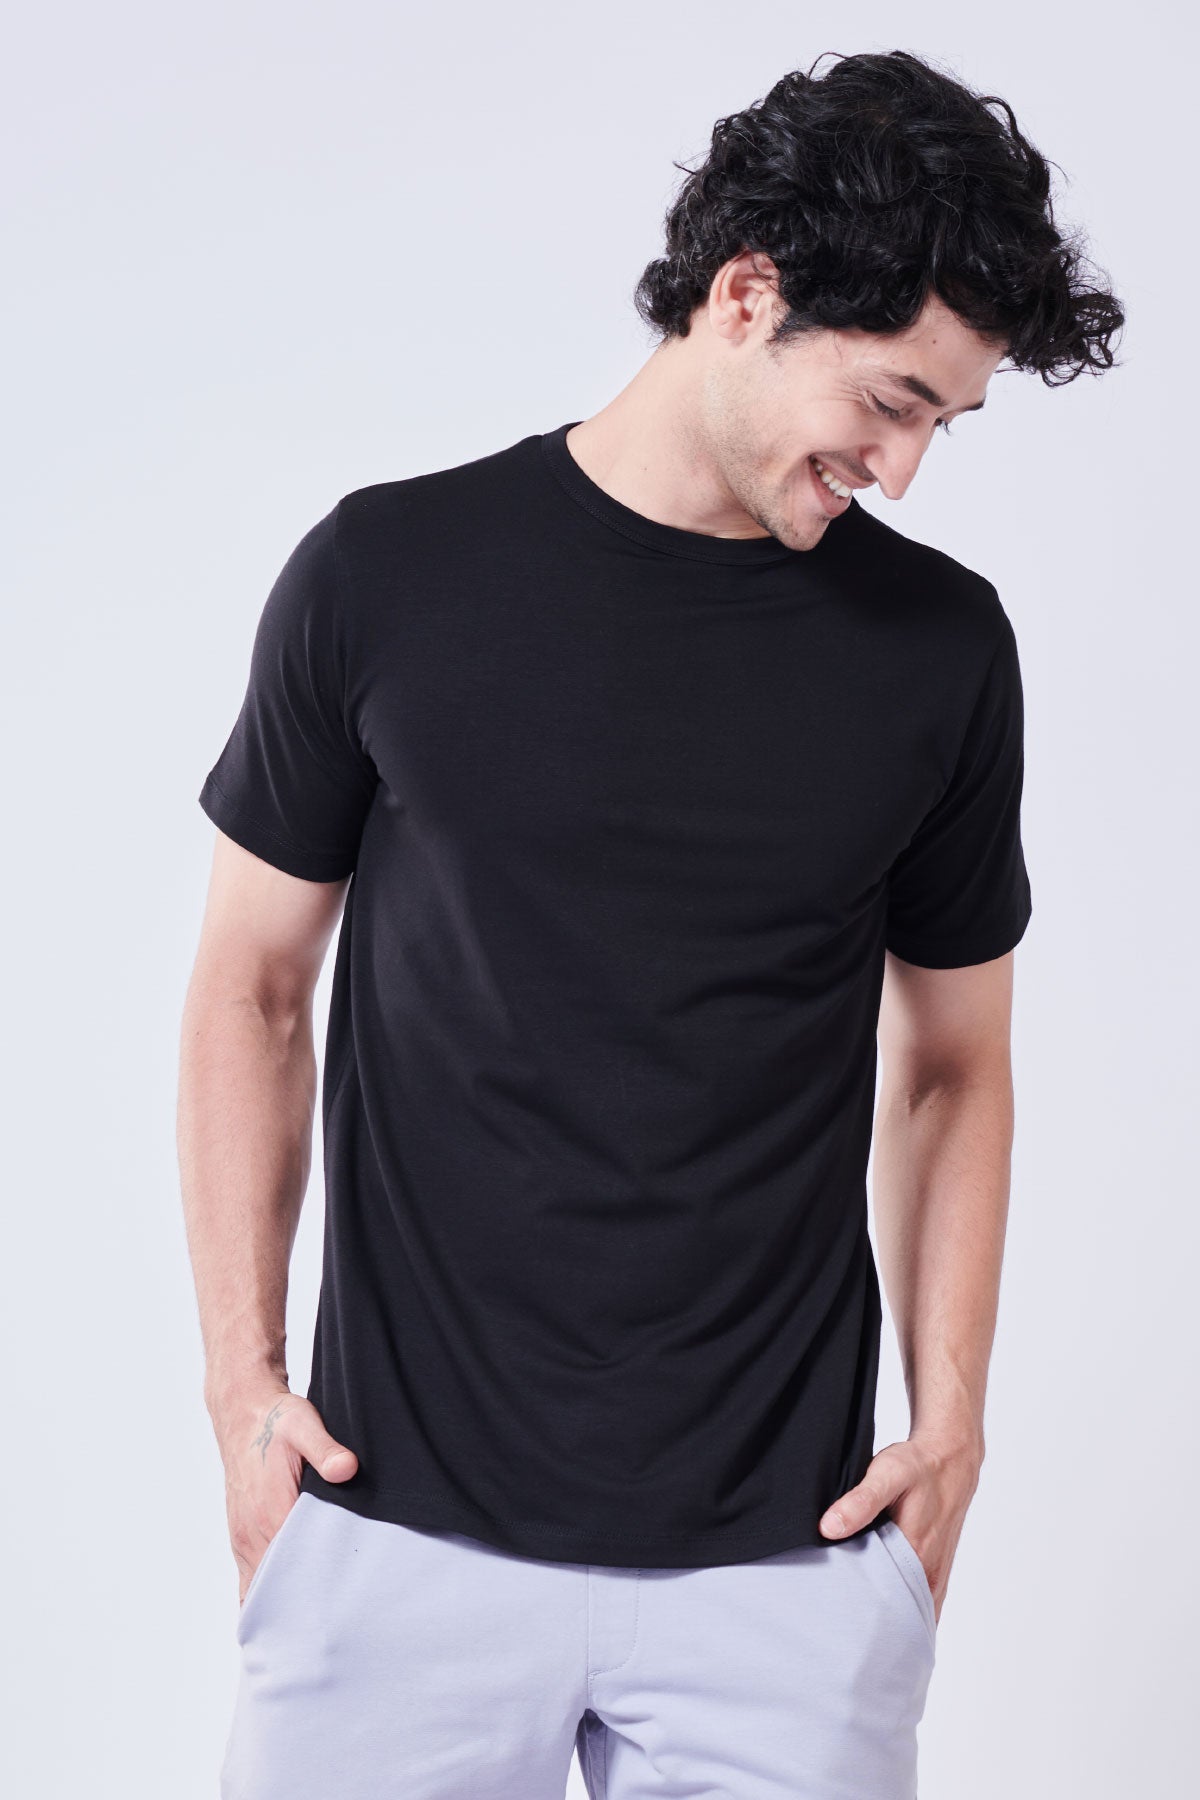 Cotton T-shirt - Buy online